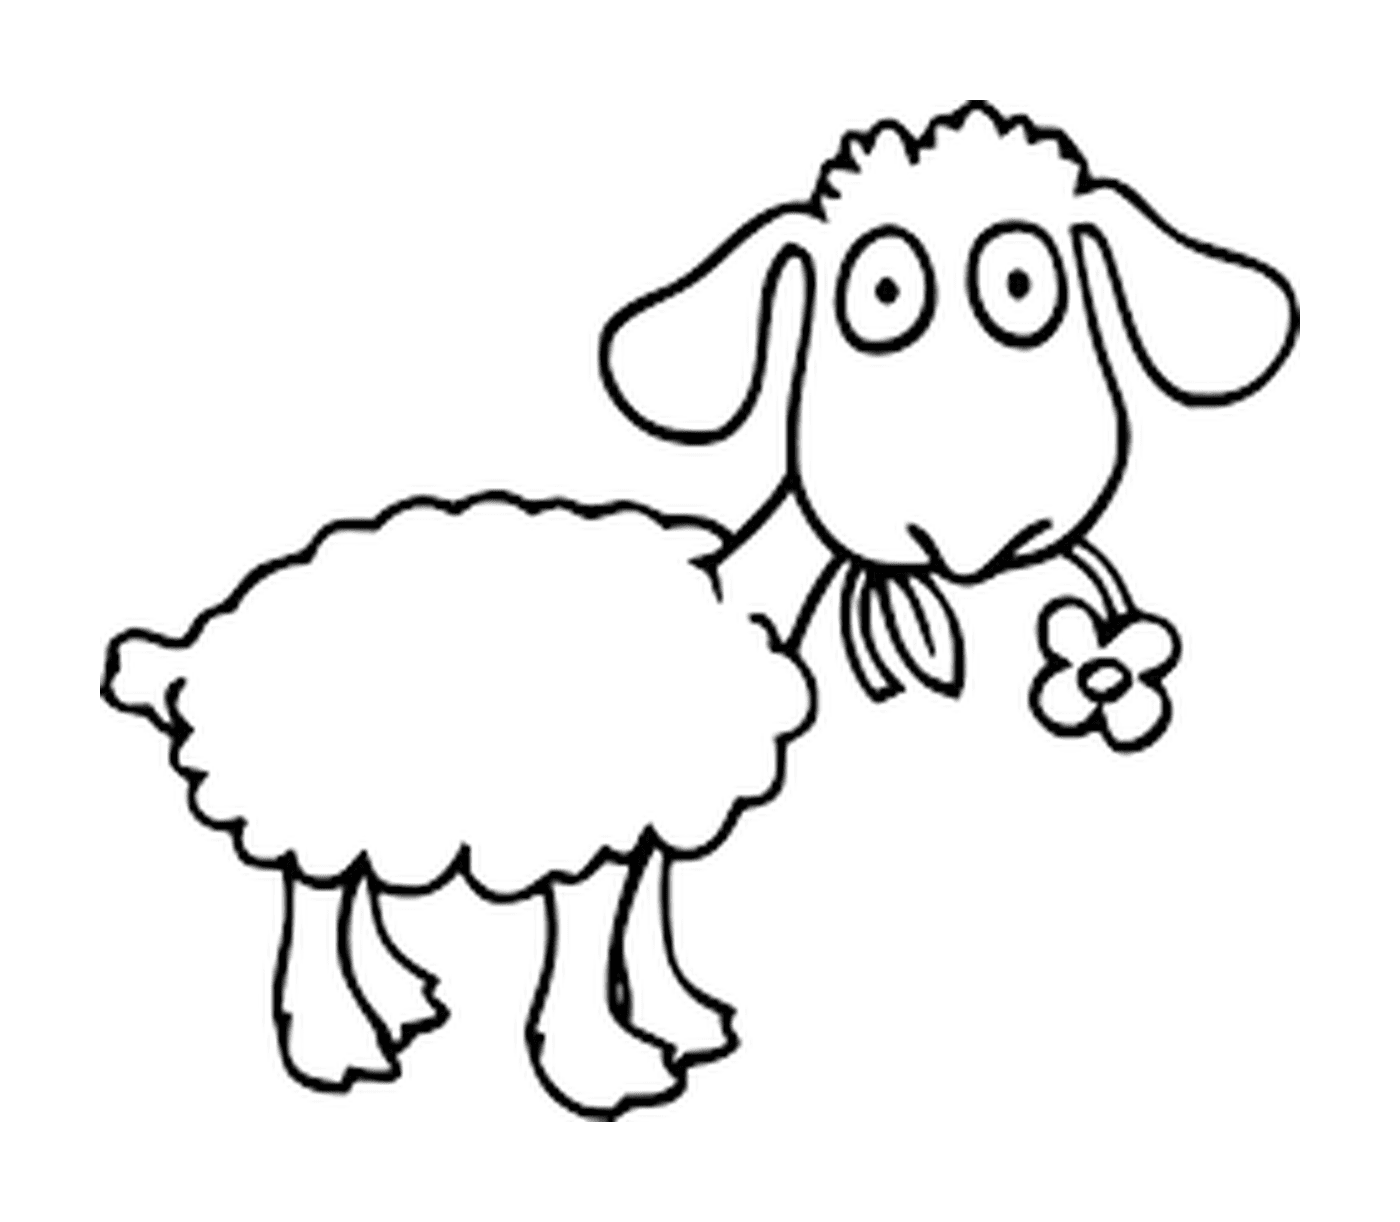  Mouton graciosamente provado flor 